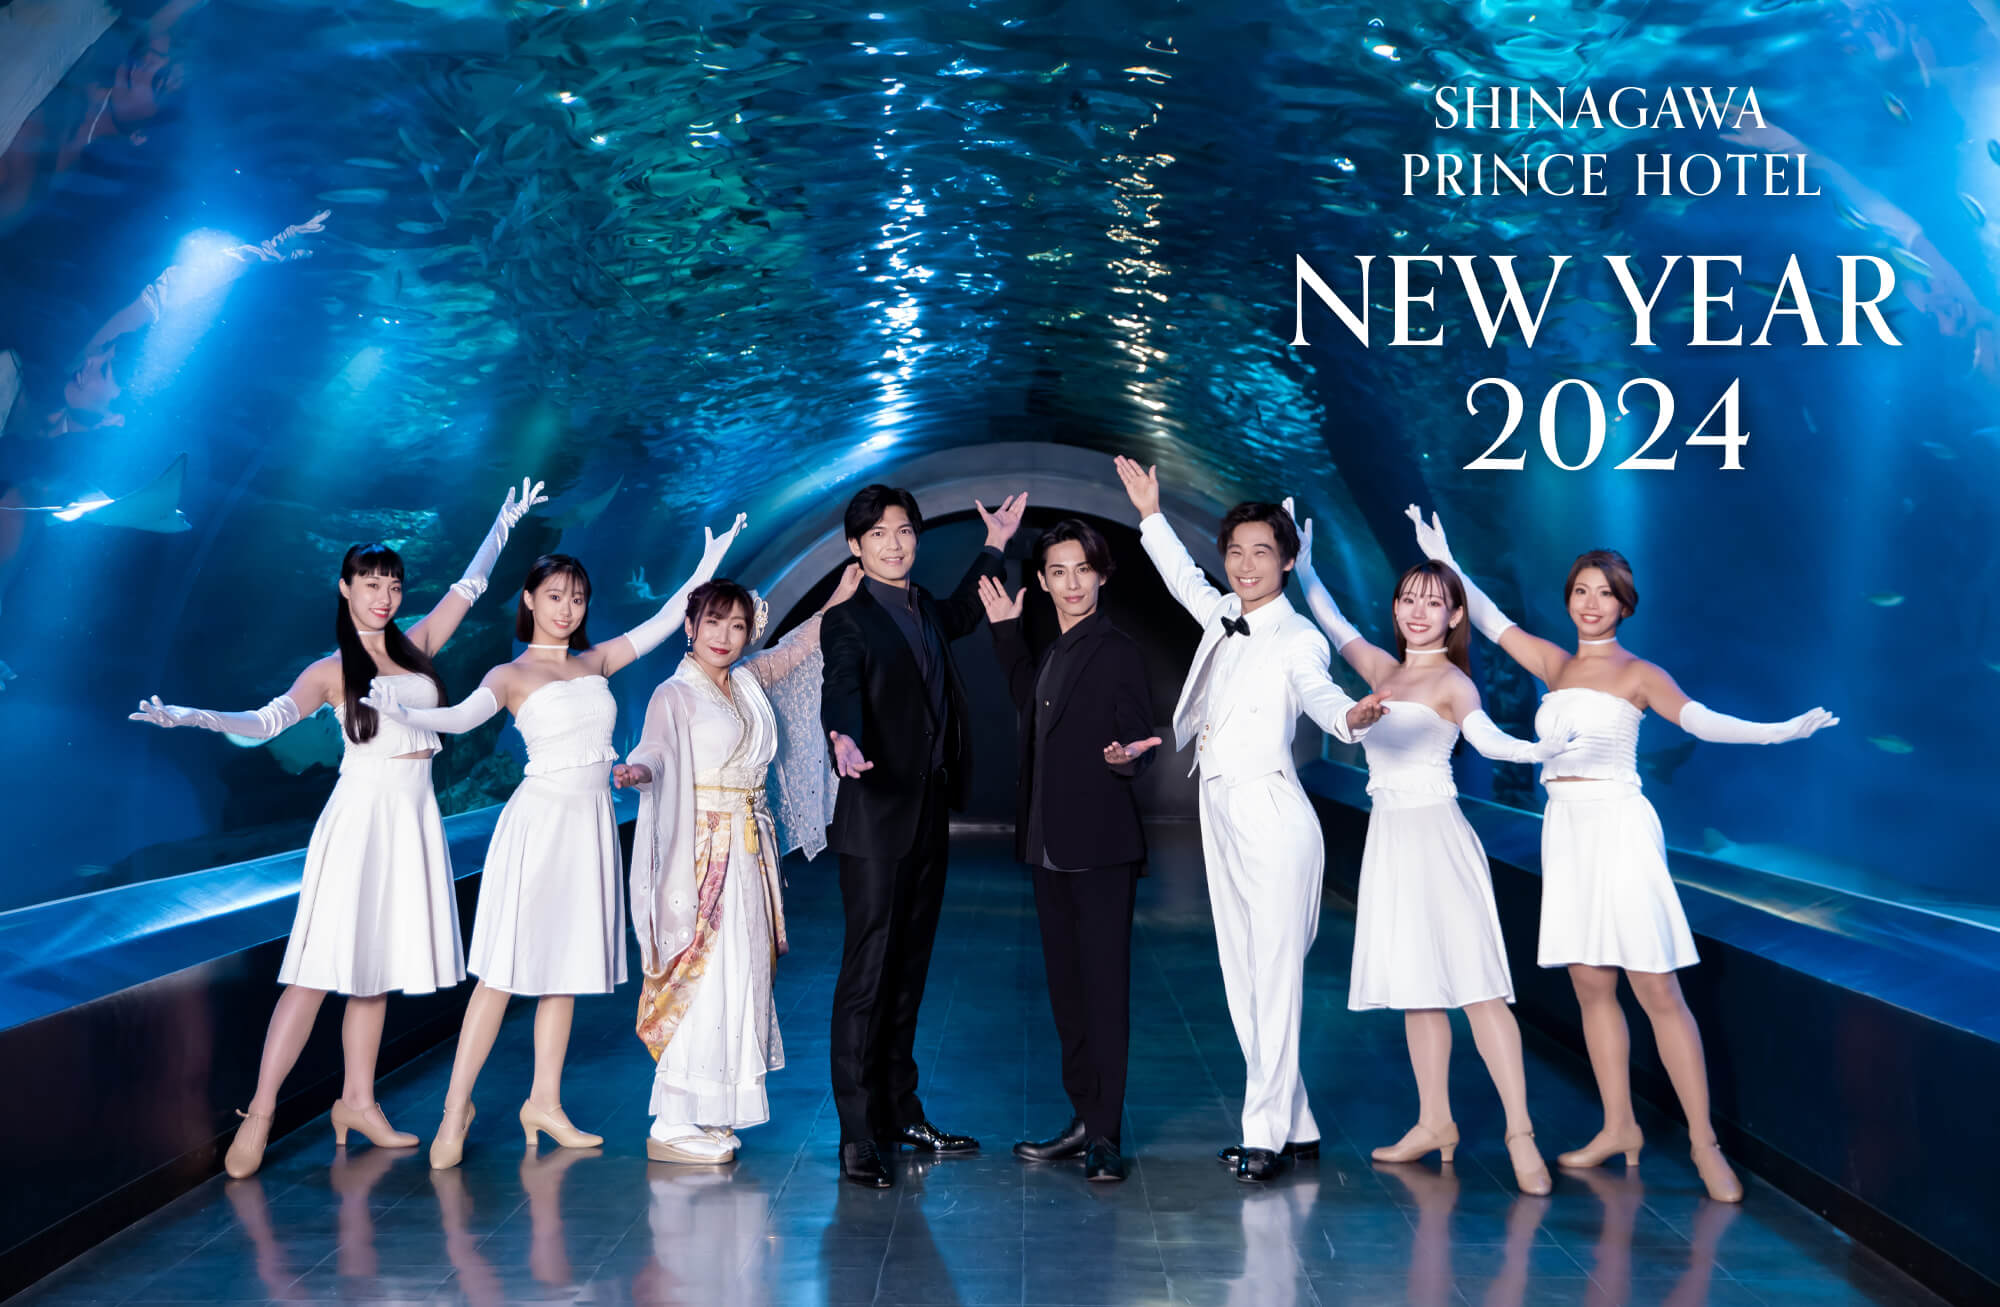 SHINAGAWA PRINCE HOTEL NEW YEAR 2024